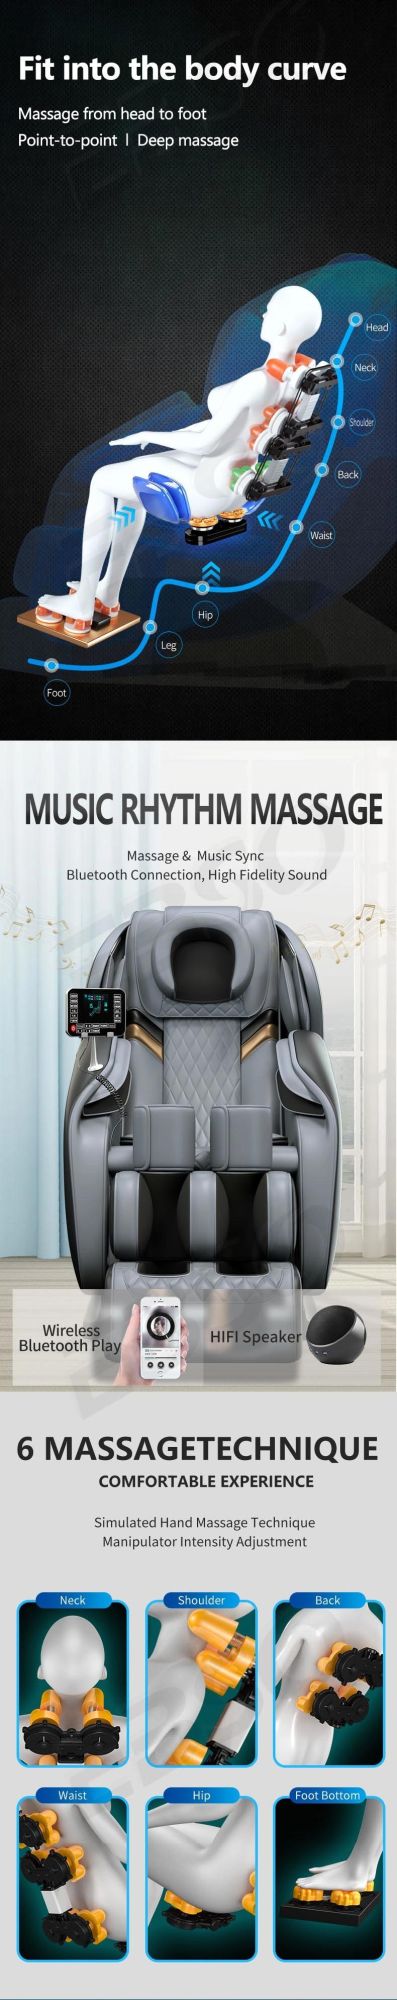 Massage Equipment Manufacturers Zero Gravity Full Body Massage Chair with Heat